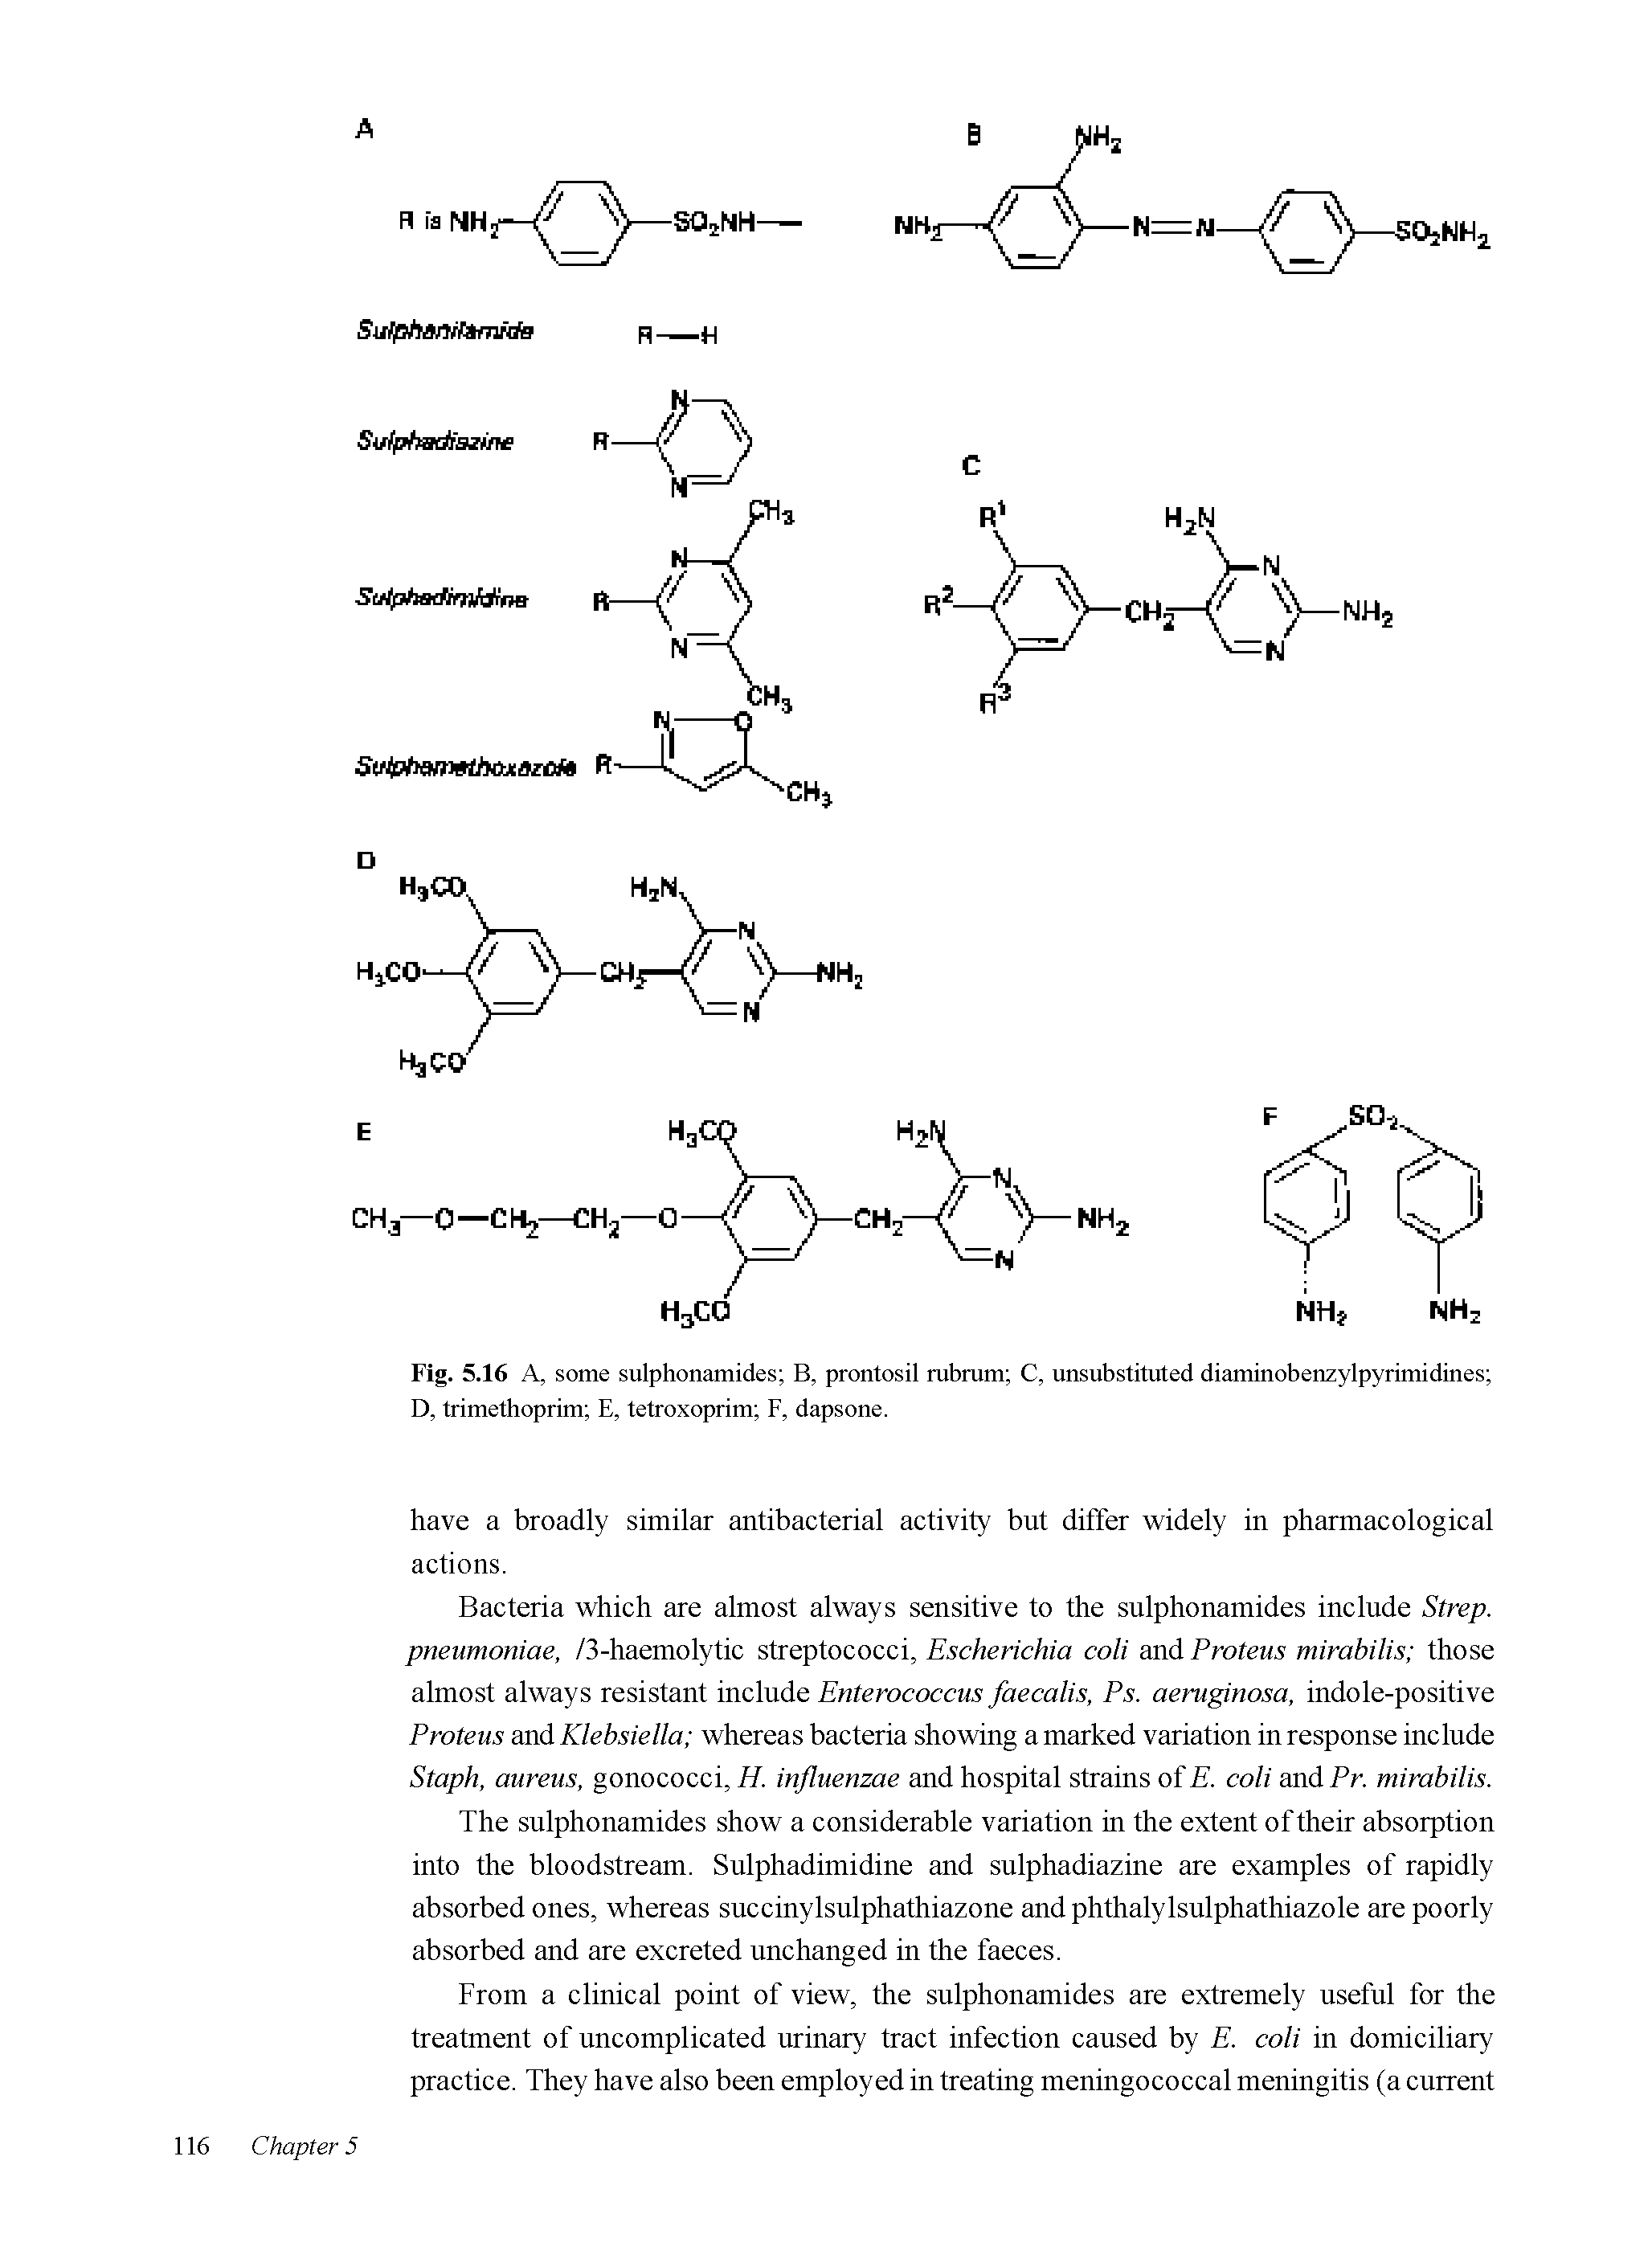 Fig. 5.16 A, some sulphonamides B, prontosil rabram C, unsubstituted diaminobenzylpyrimidines D, trimethoprim E, tetroxoprim F, dapsone.